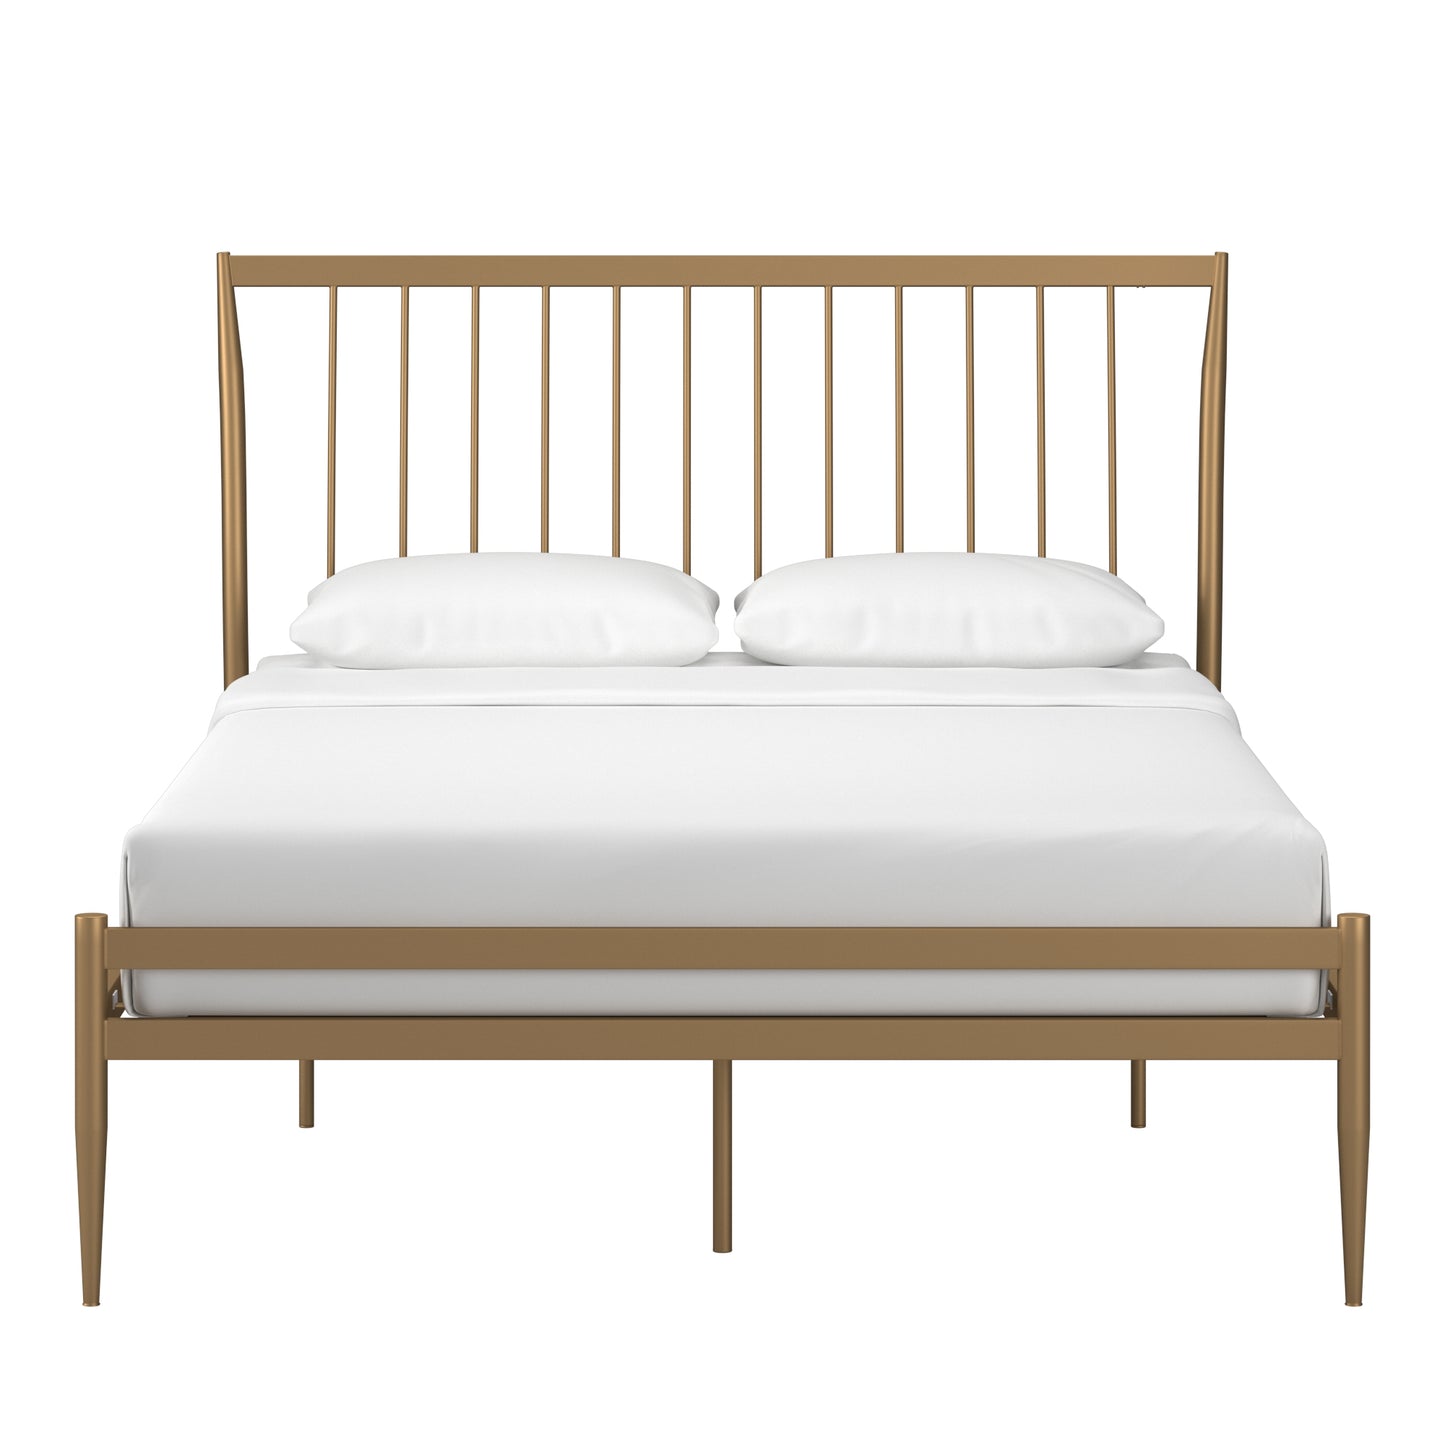 Gold Finish Metal Bed - Full (Full Size)